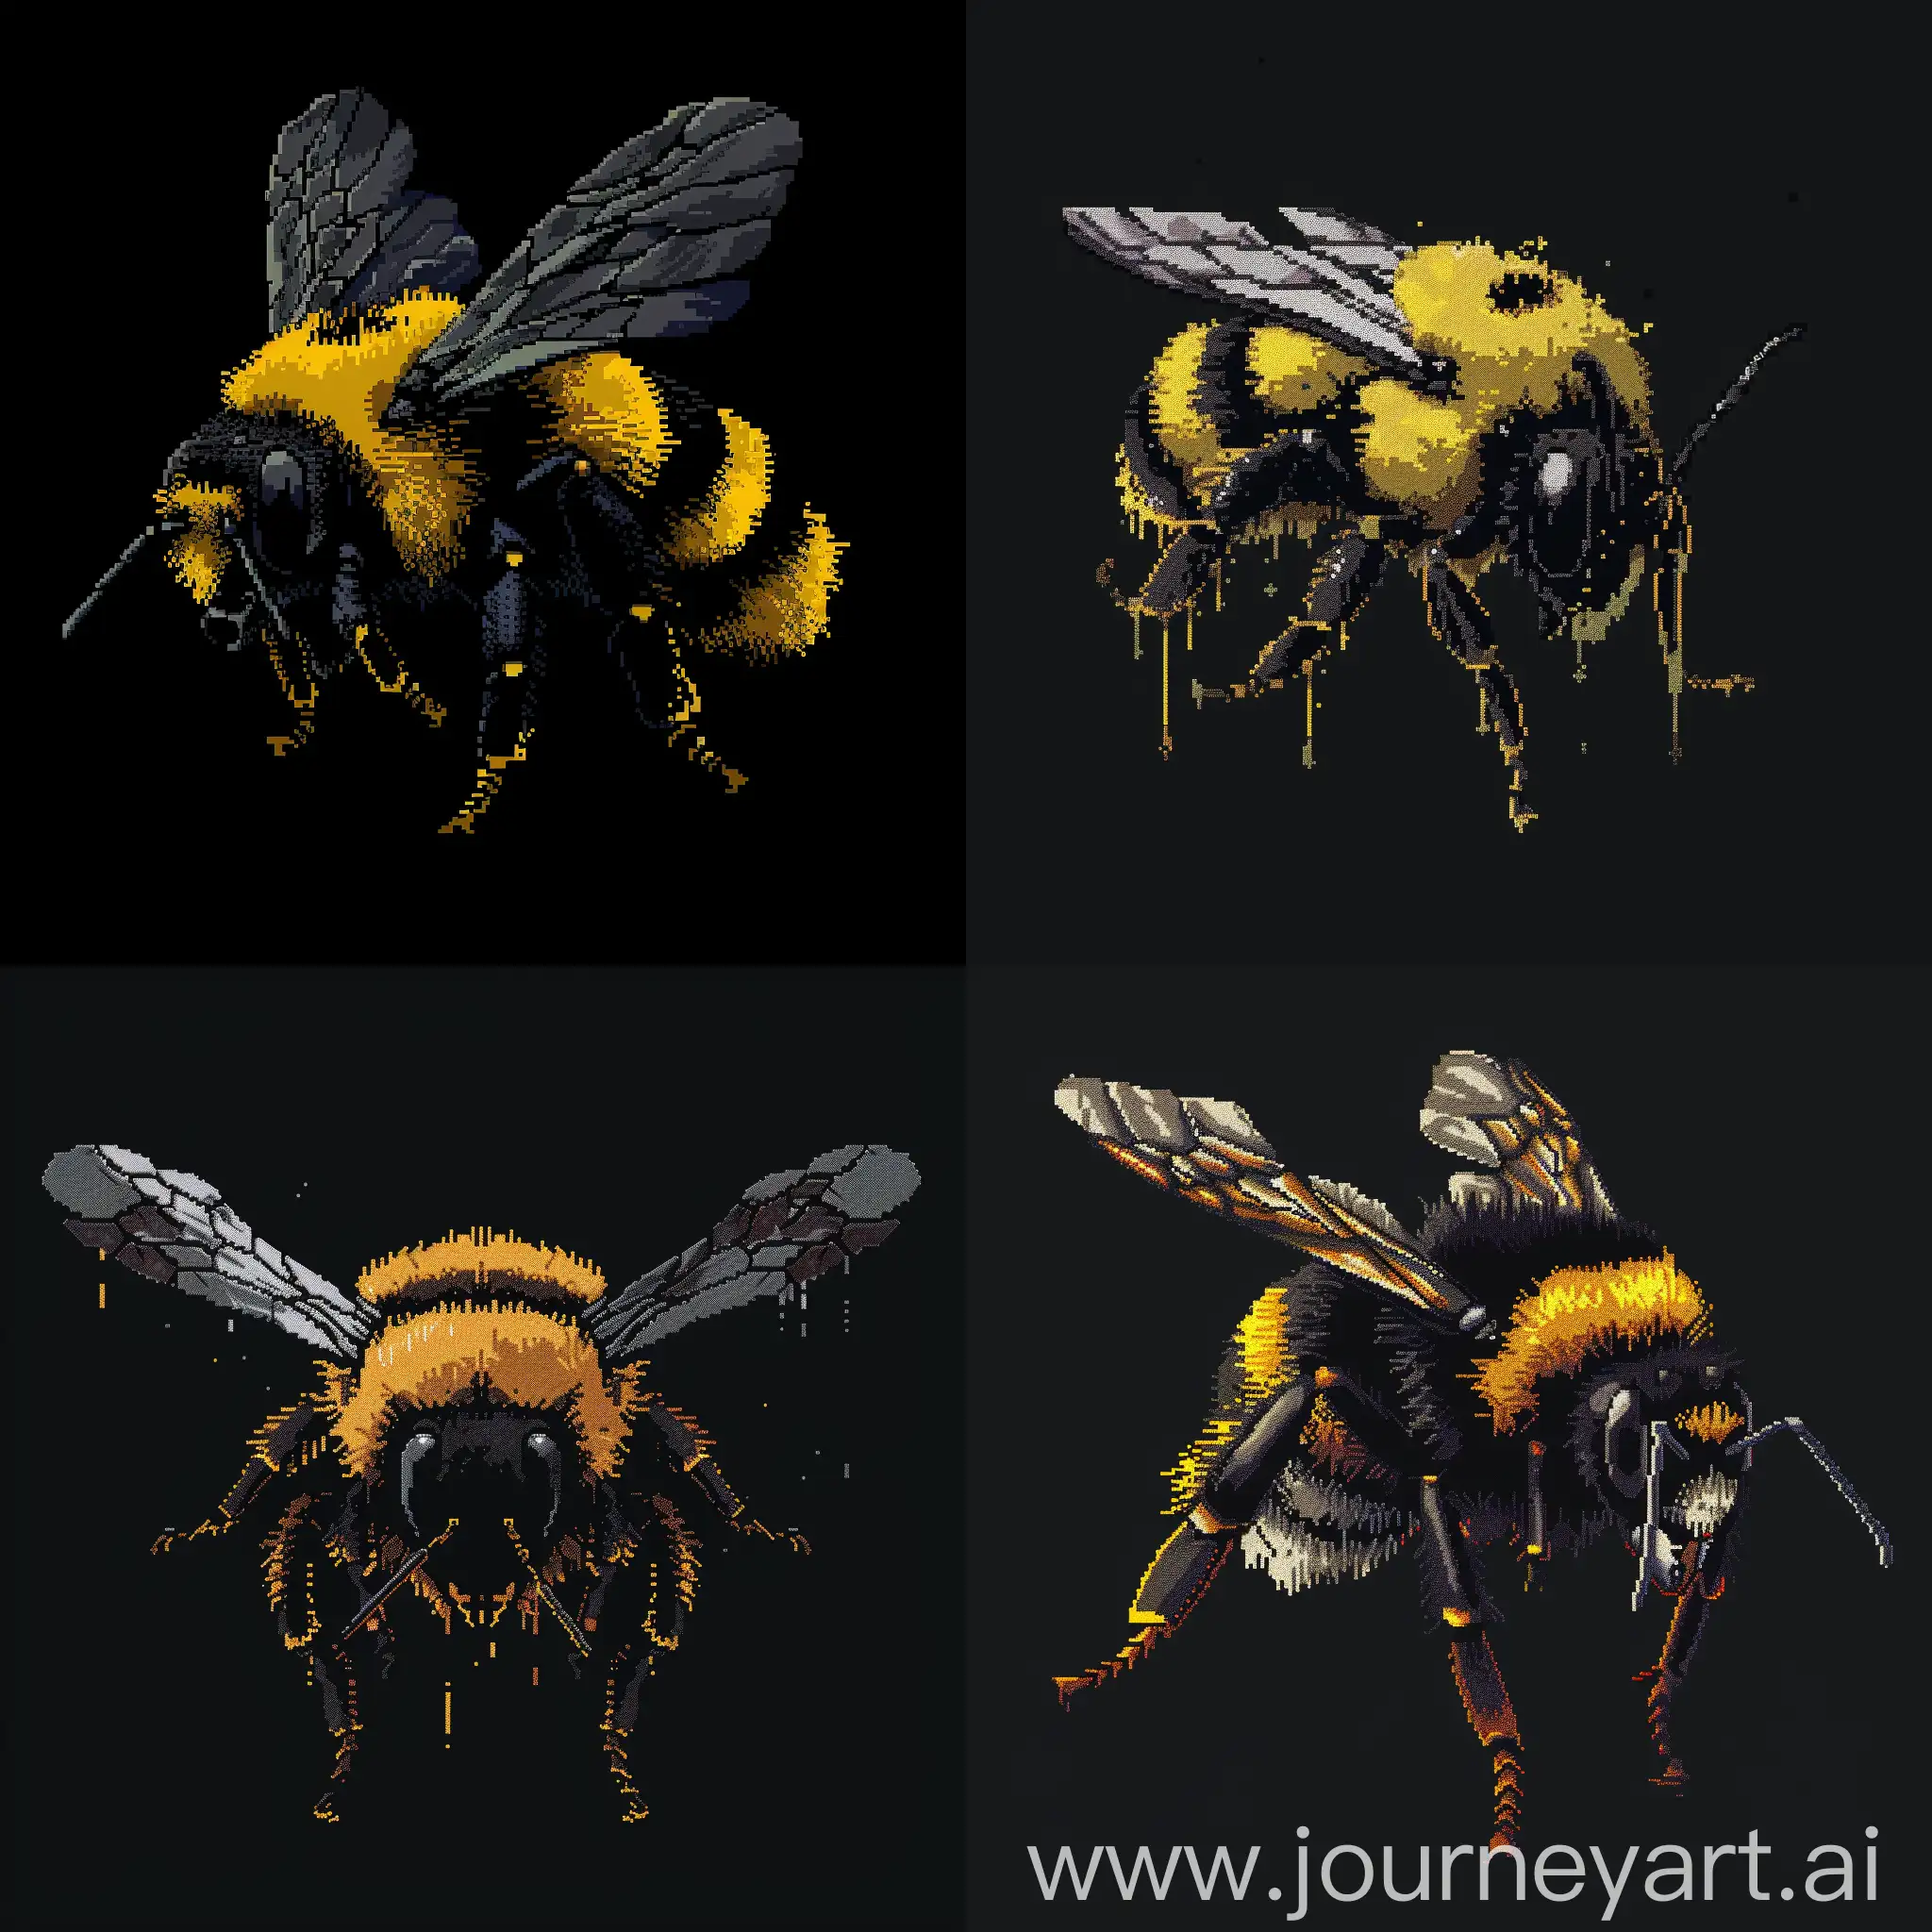  bumblebee pixel art, background all black, horror style